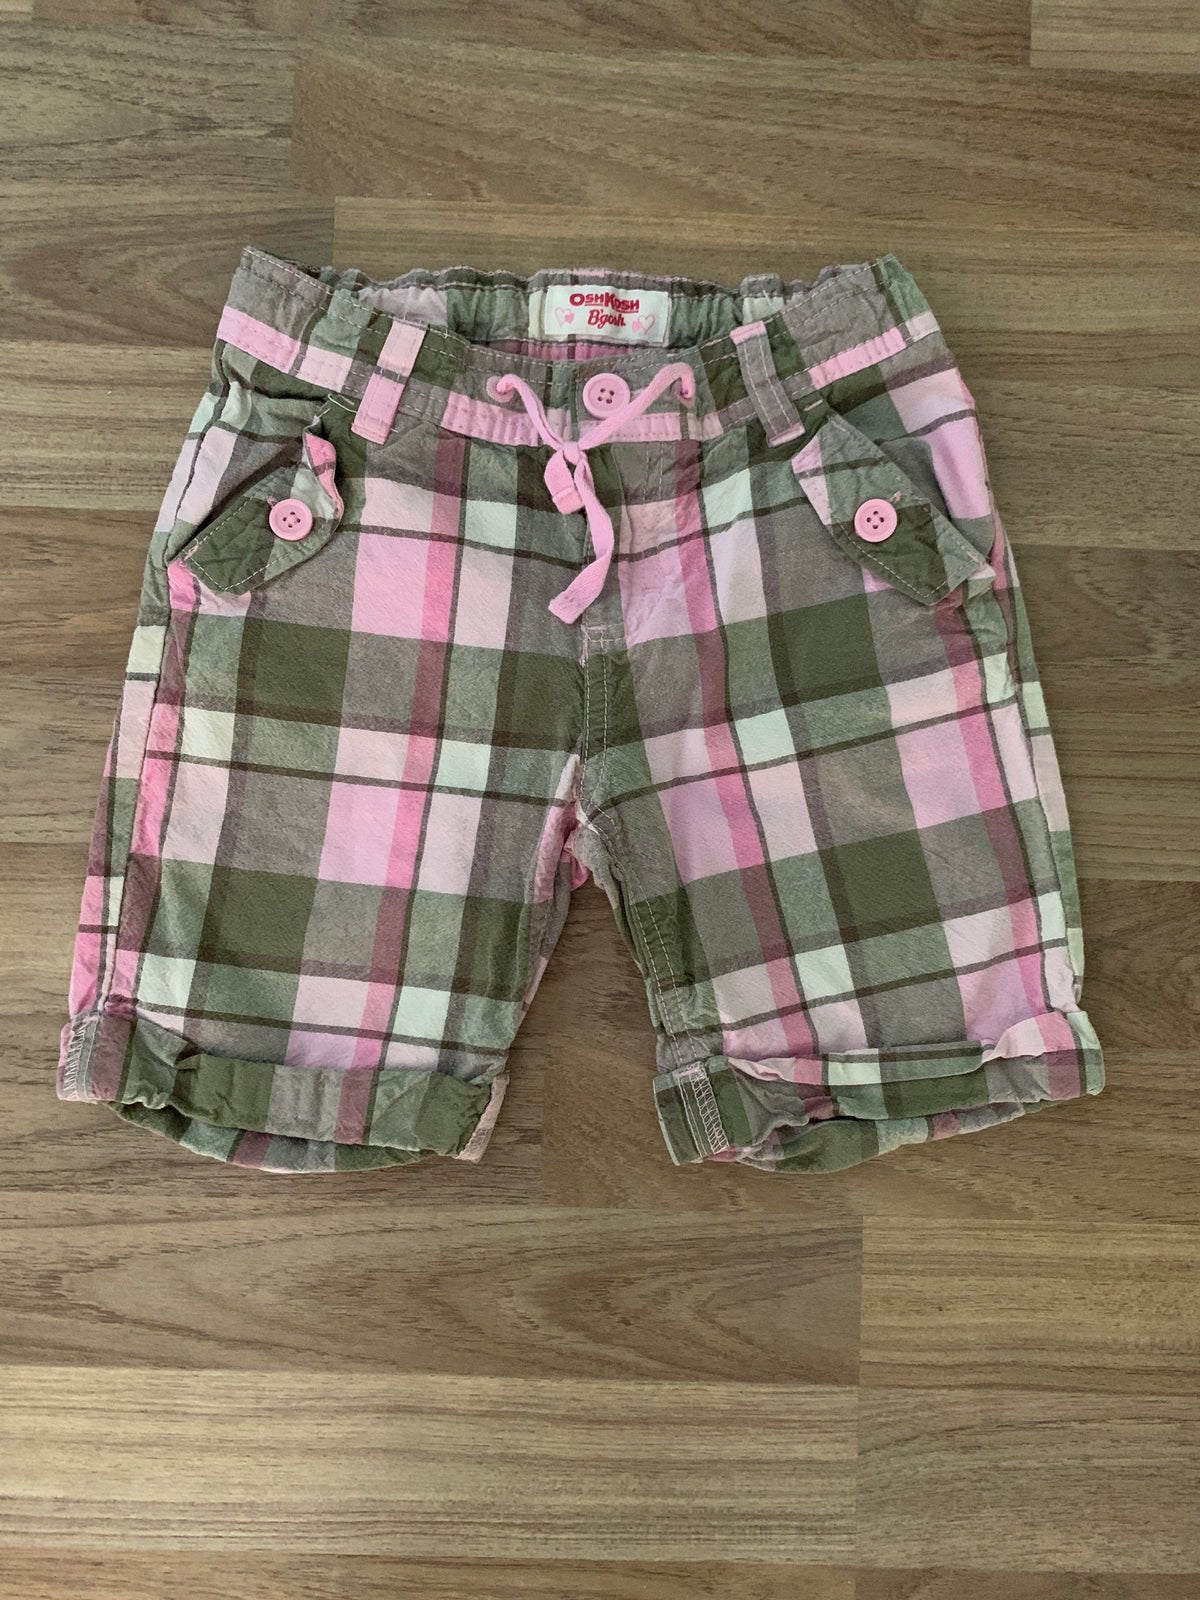 Shorts (Girls Size 6X)